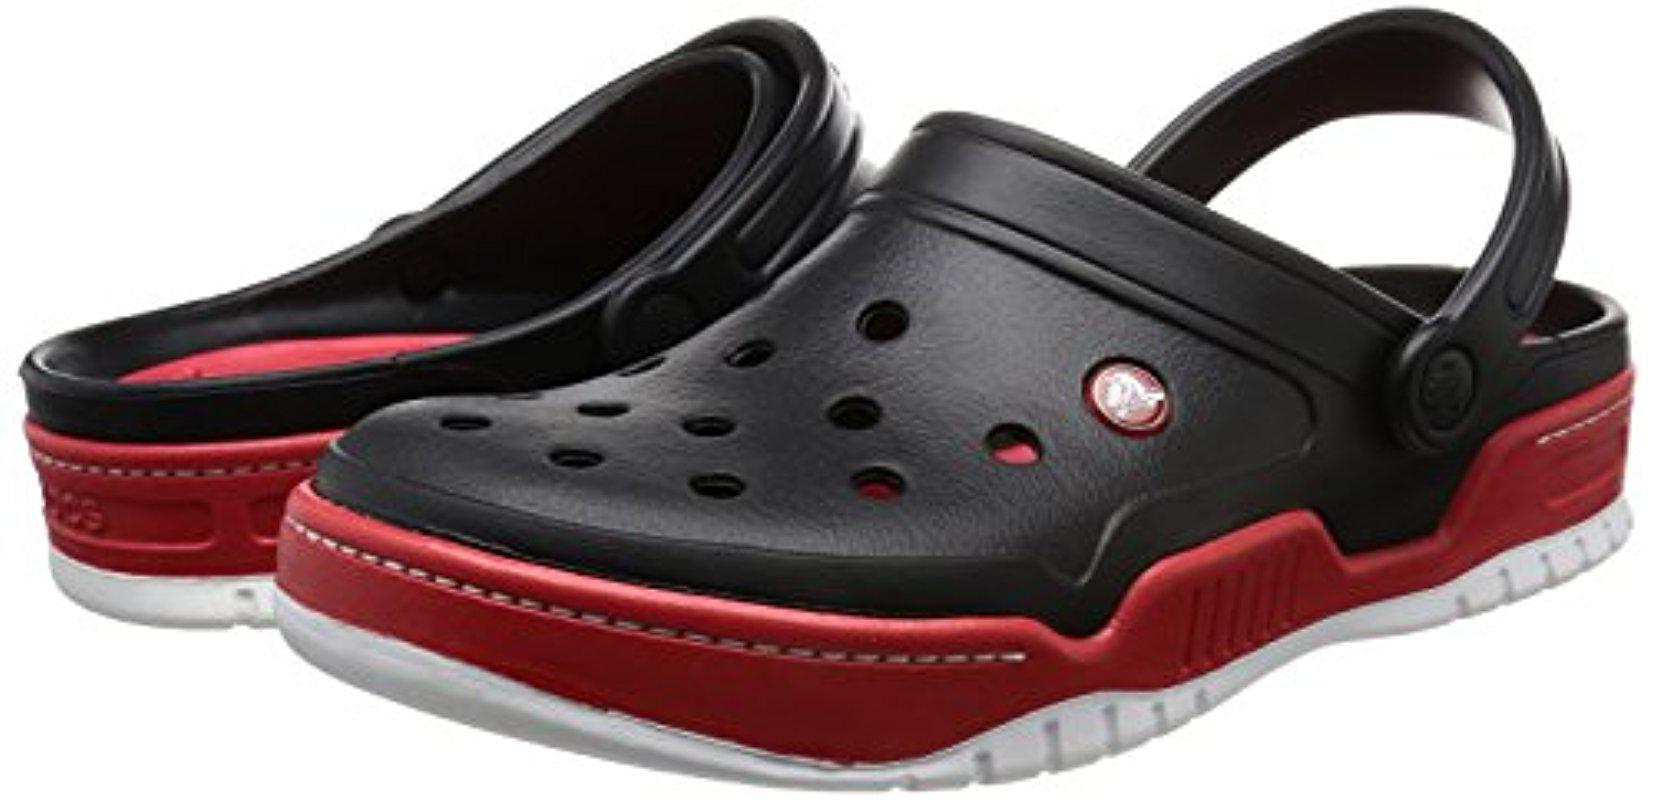 crocs red black